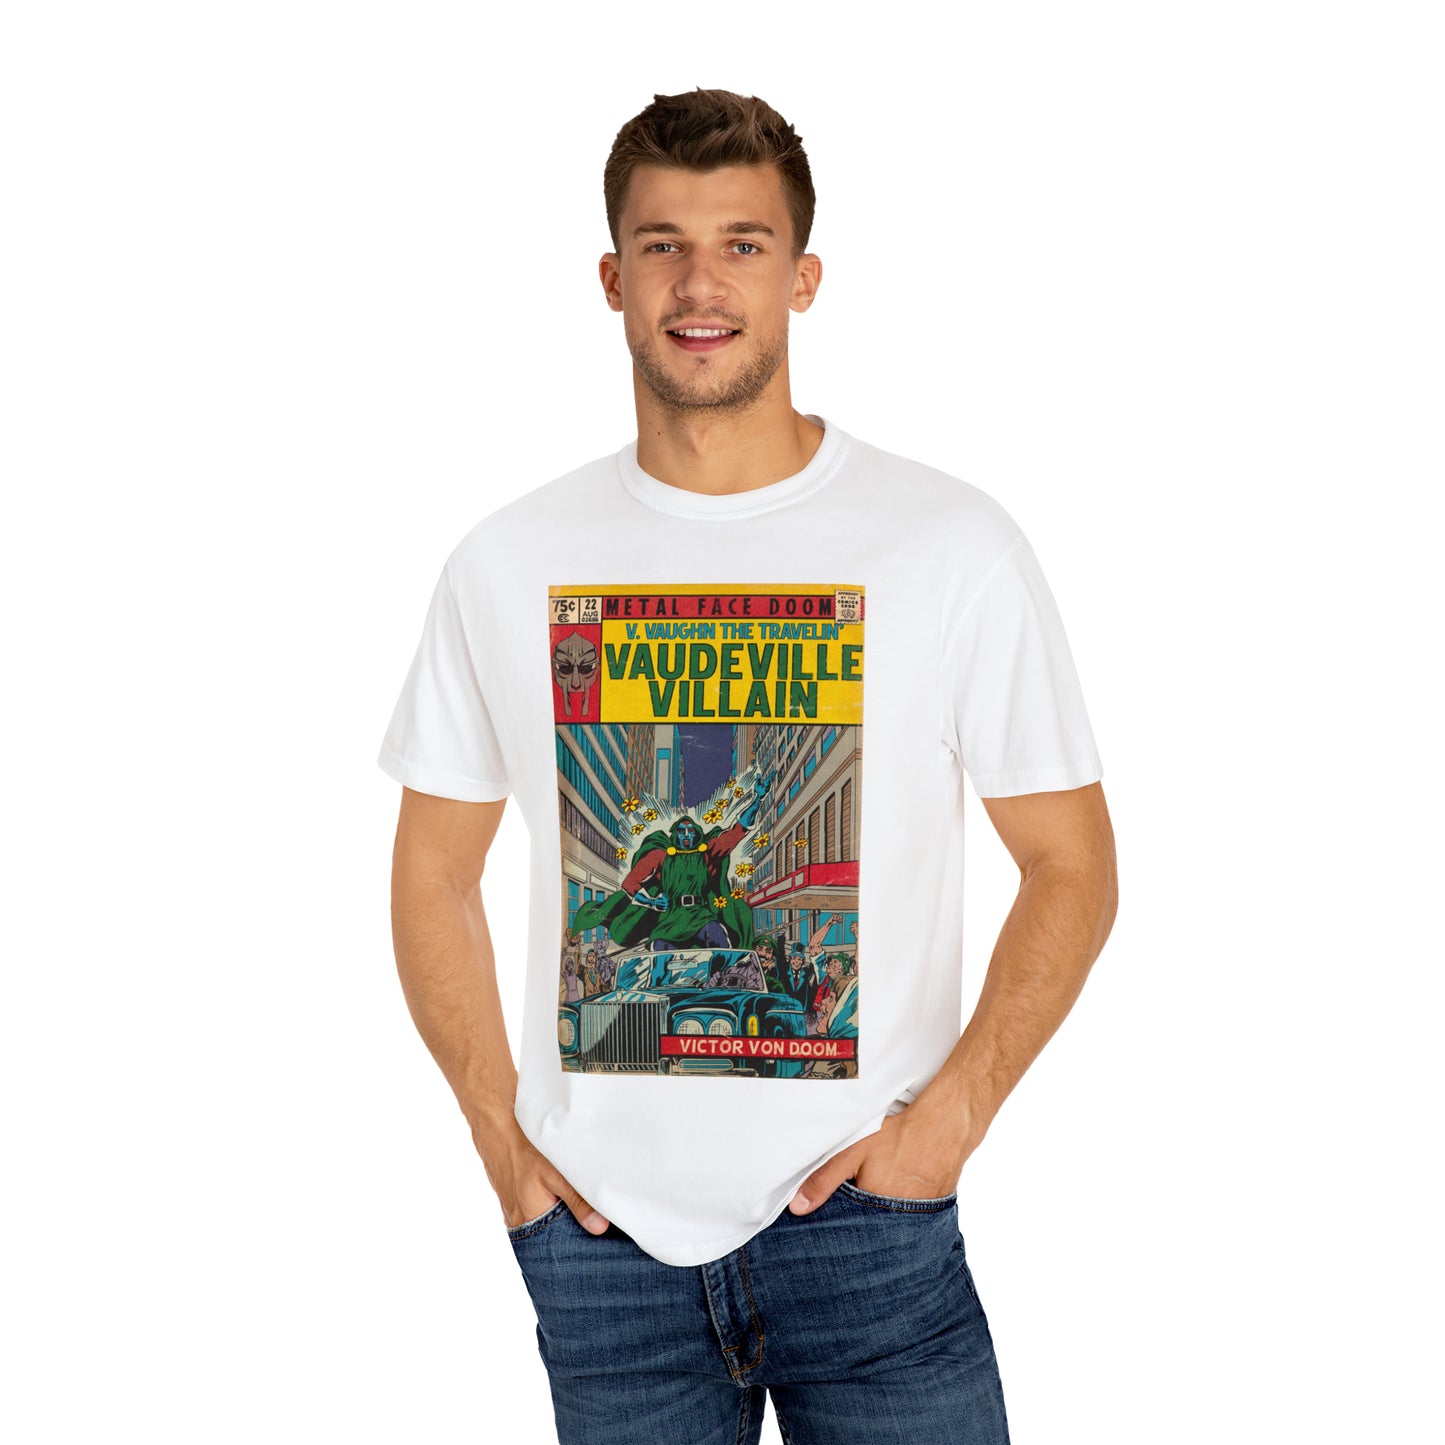 MF DOOM - Vaudeville Villian - Unisex Comfort Colors T-shirt